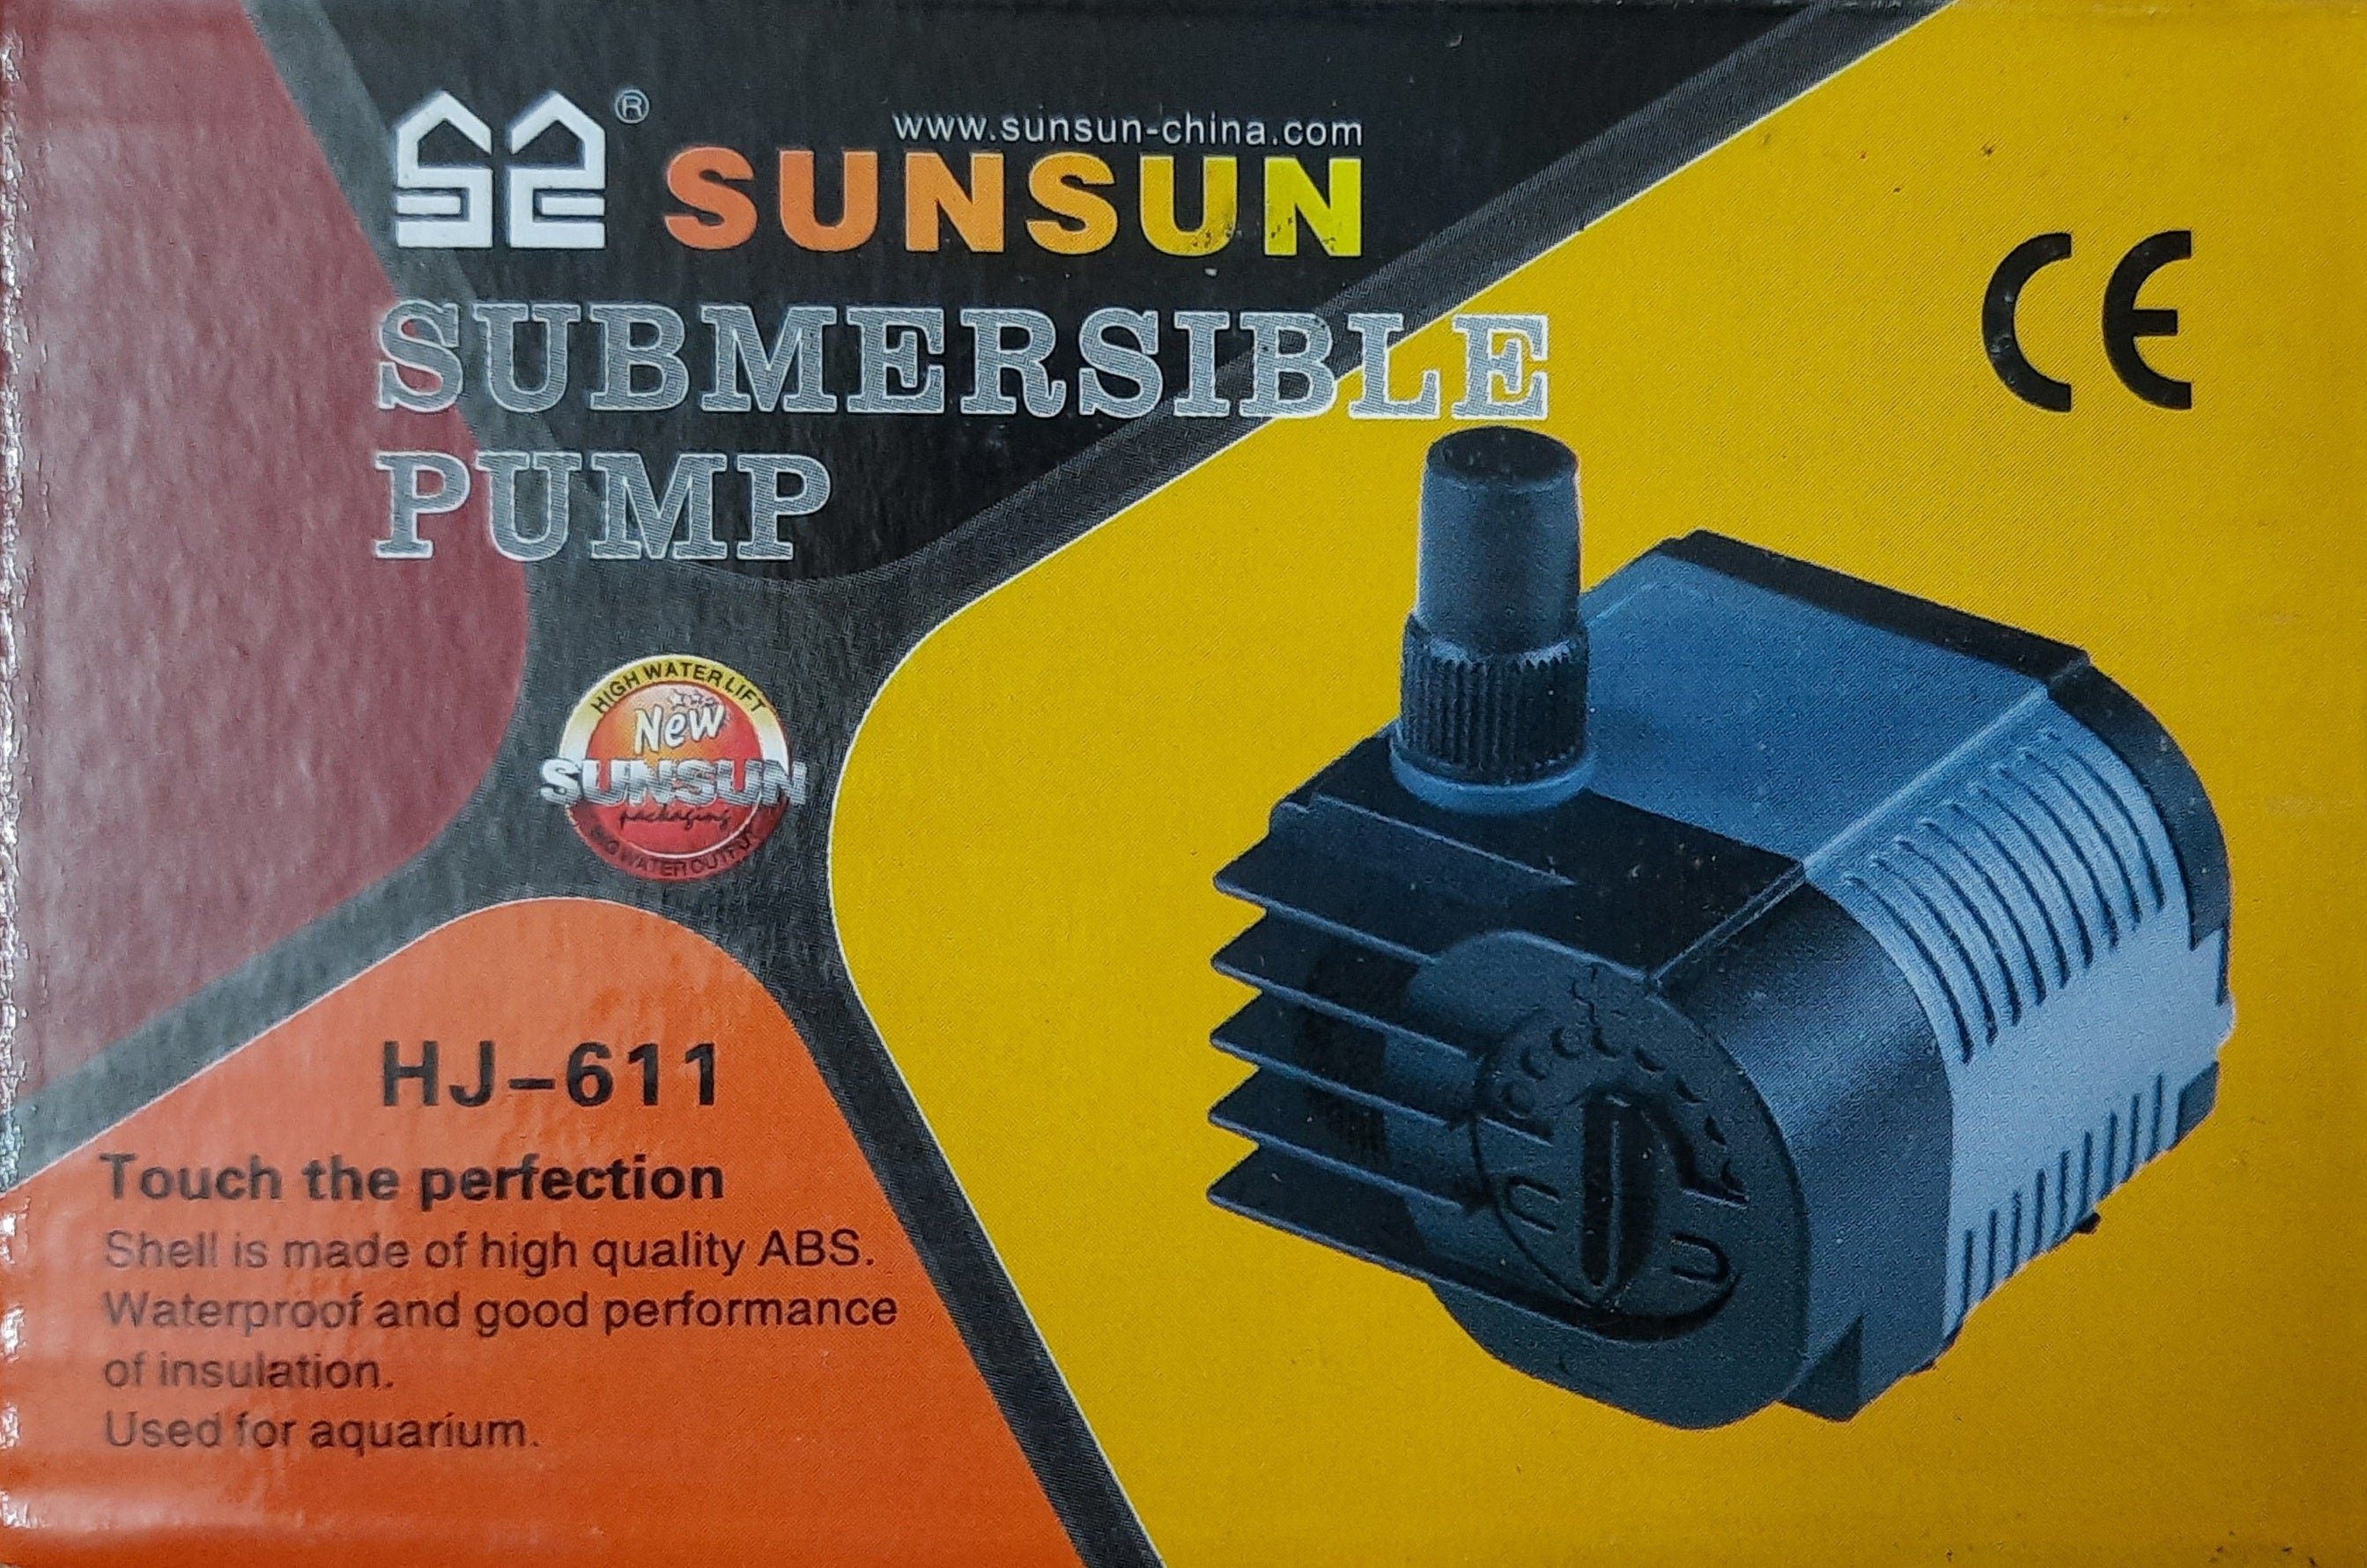 SUNSUN HJ-611 Submersible Pump